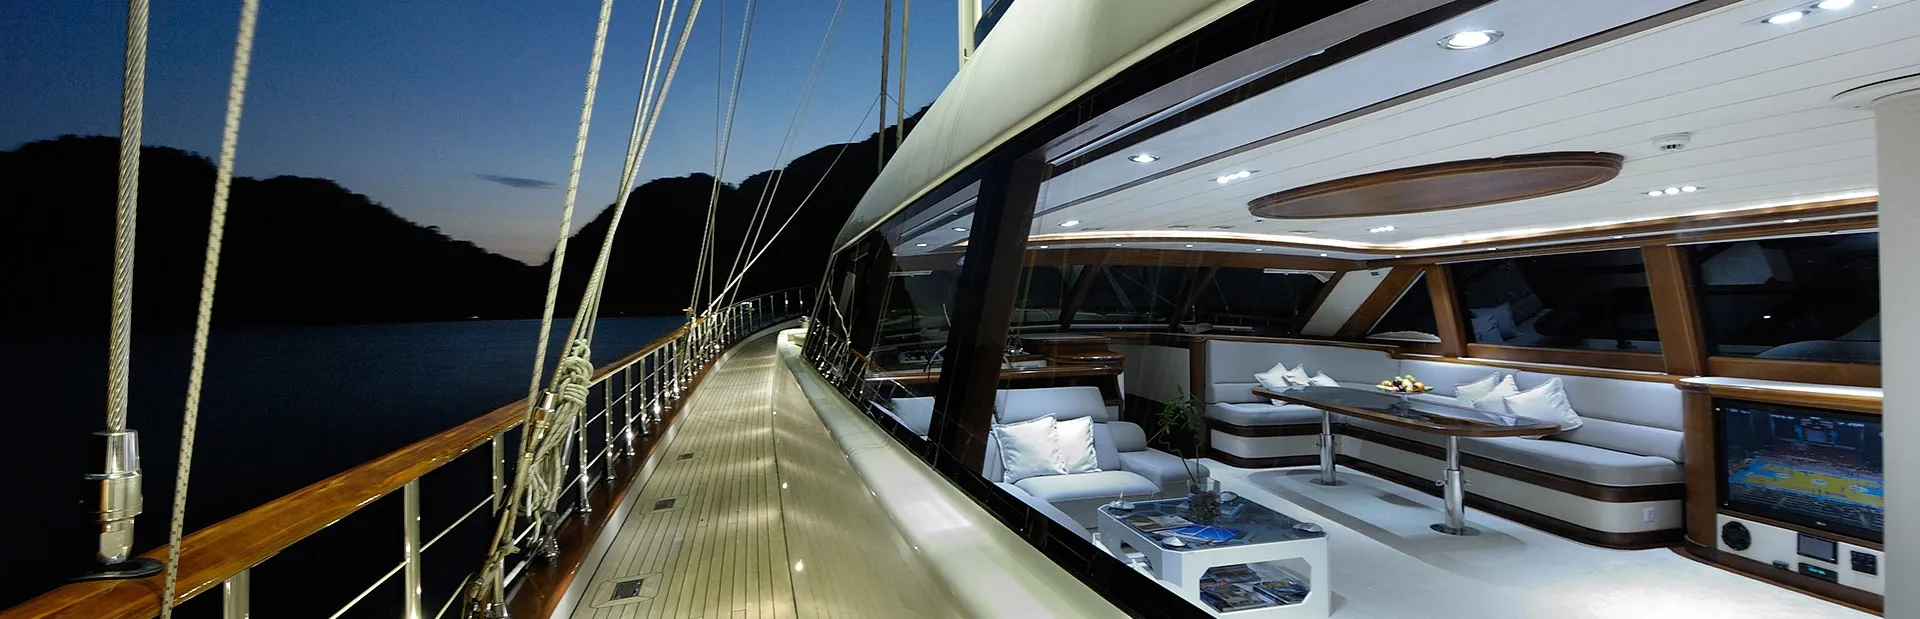 Gulet yacht Alessandro deck at night